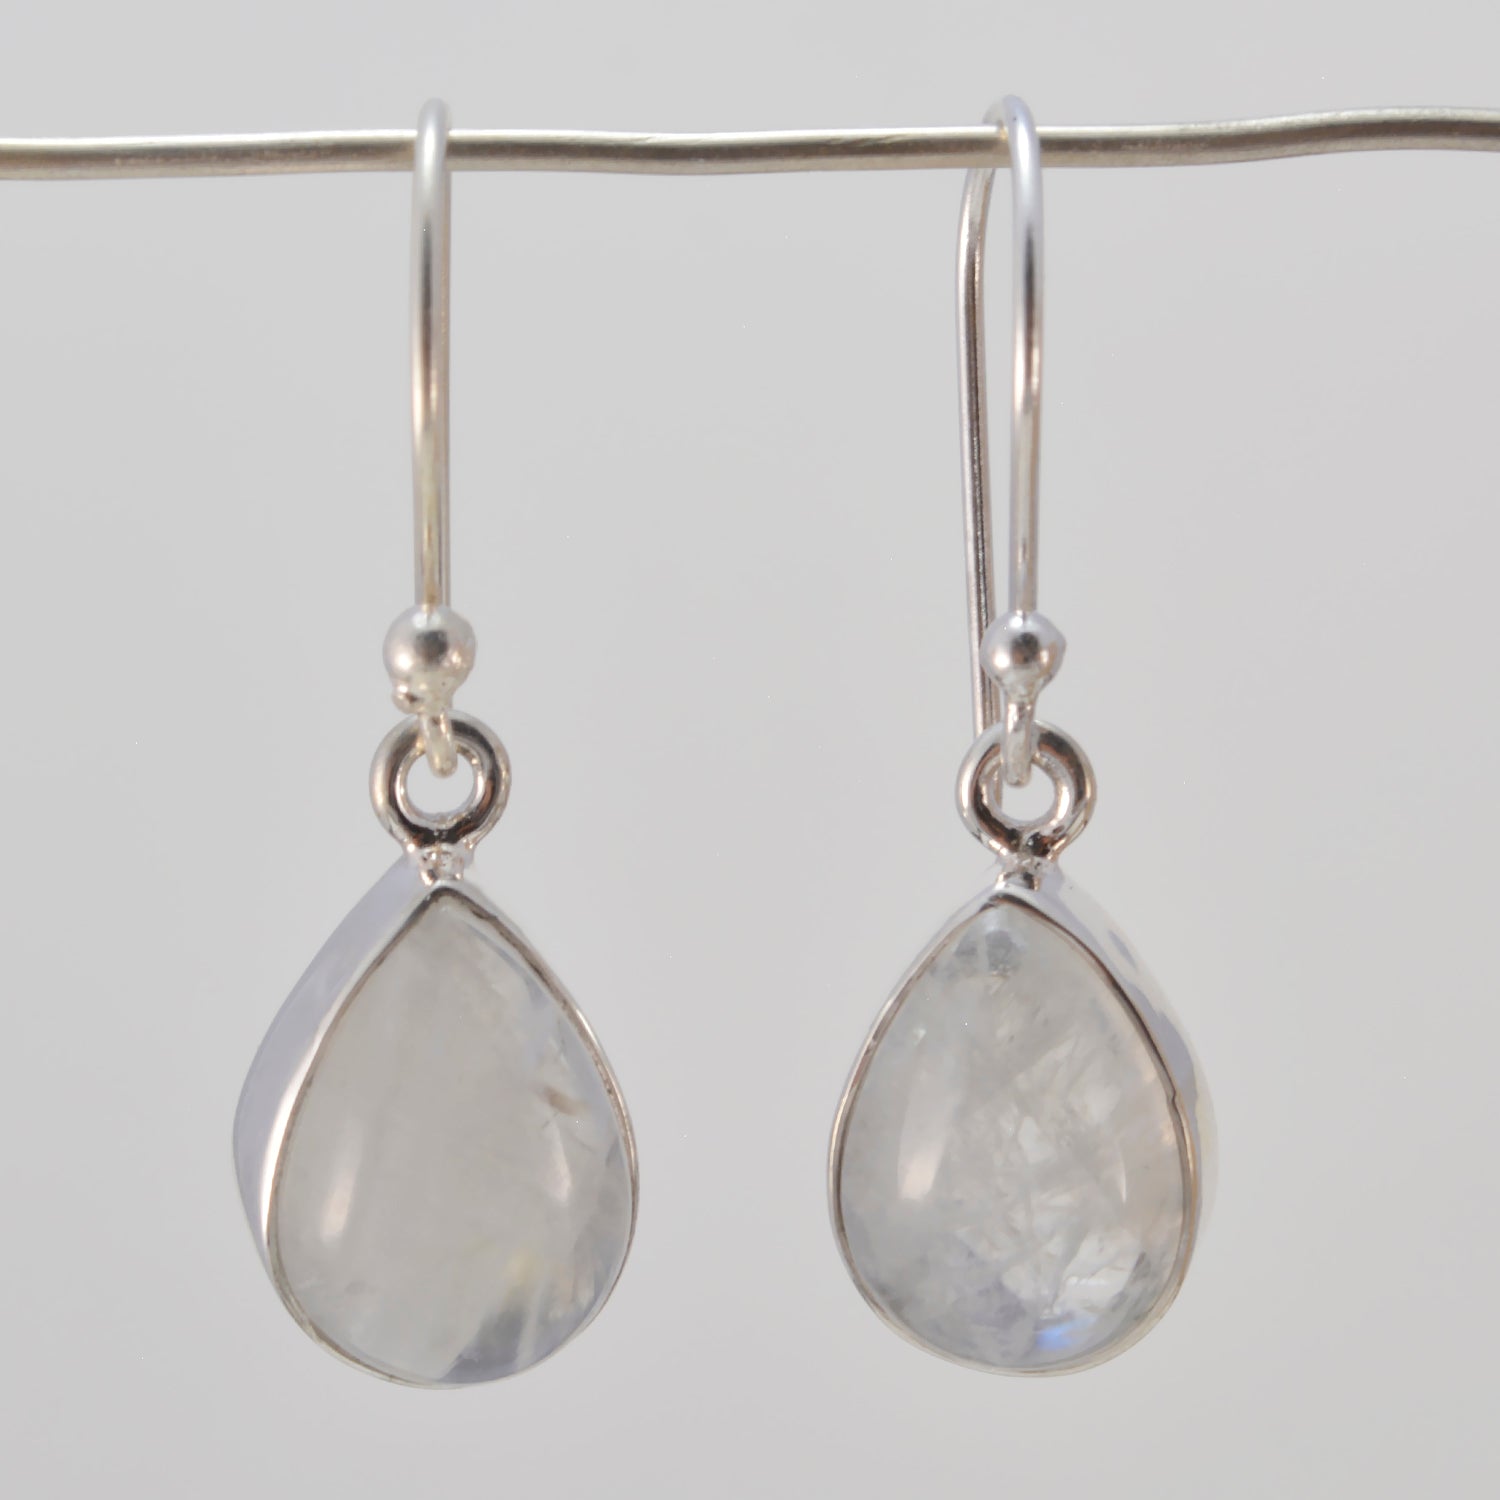 Riyo Good Gemstones pear Cabochon White Rainbow Moonstone Silver Earring gift for mom